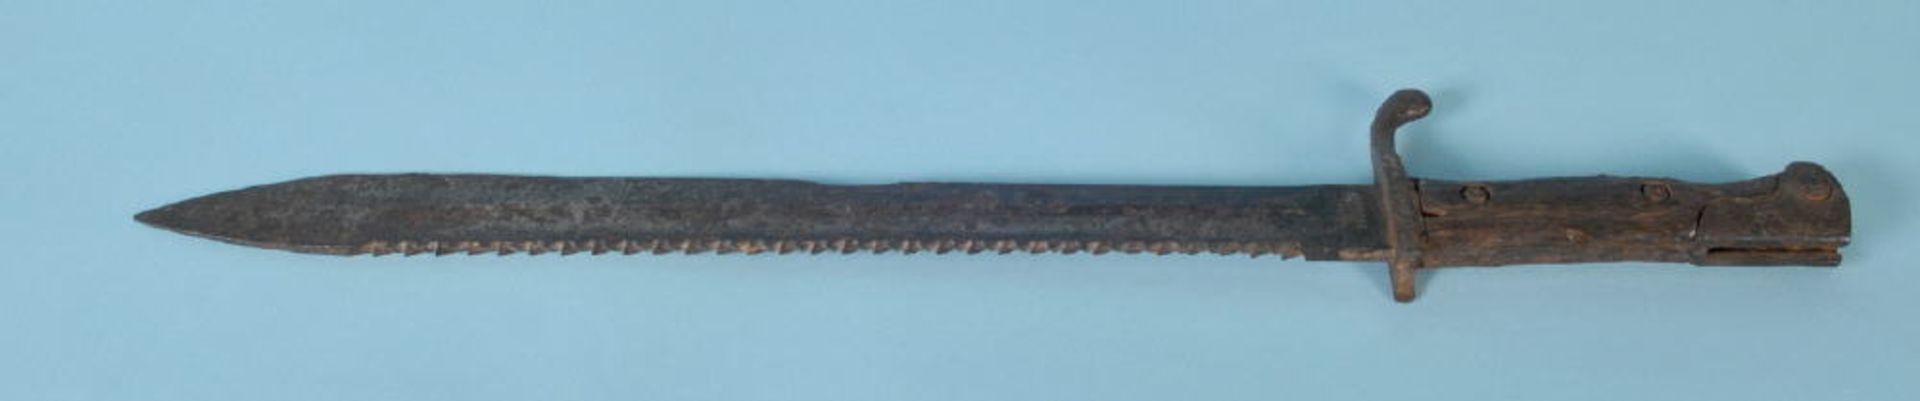 Macheten-Bajonett, Nr. 98/05Schmiedeeisen, Griffschalen Holz, Stahlklinge mit Sägerücken, L= 50